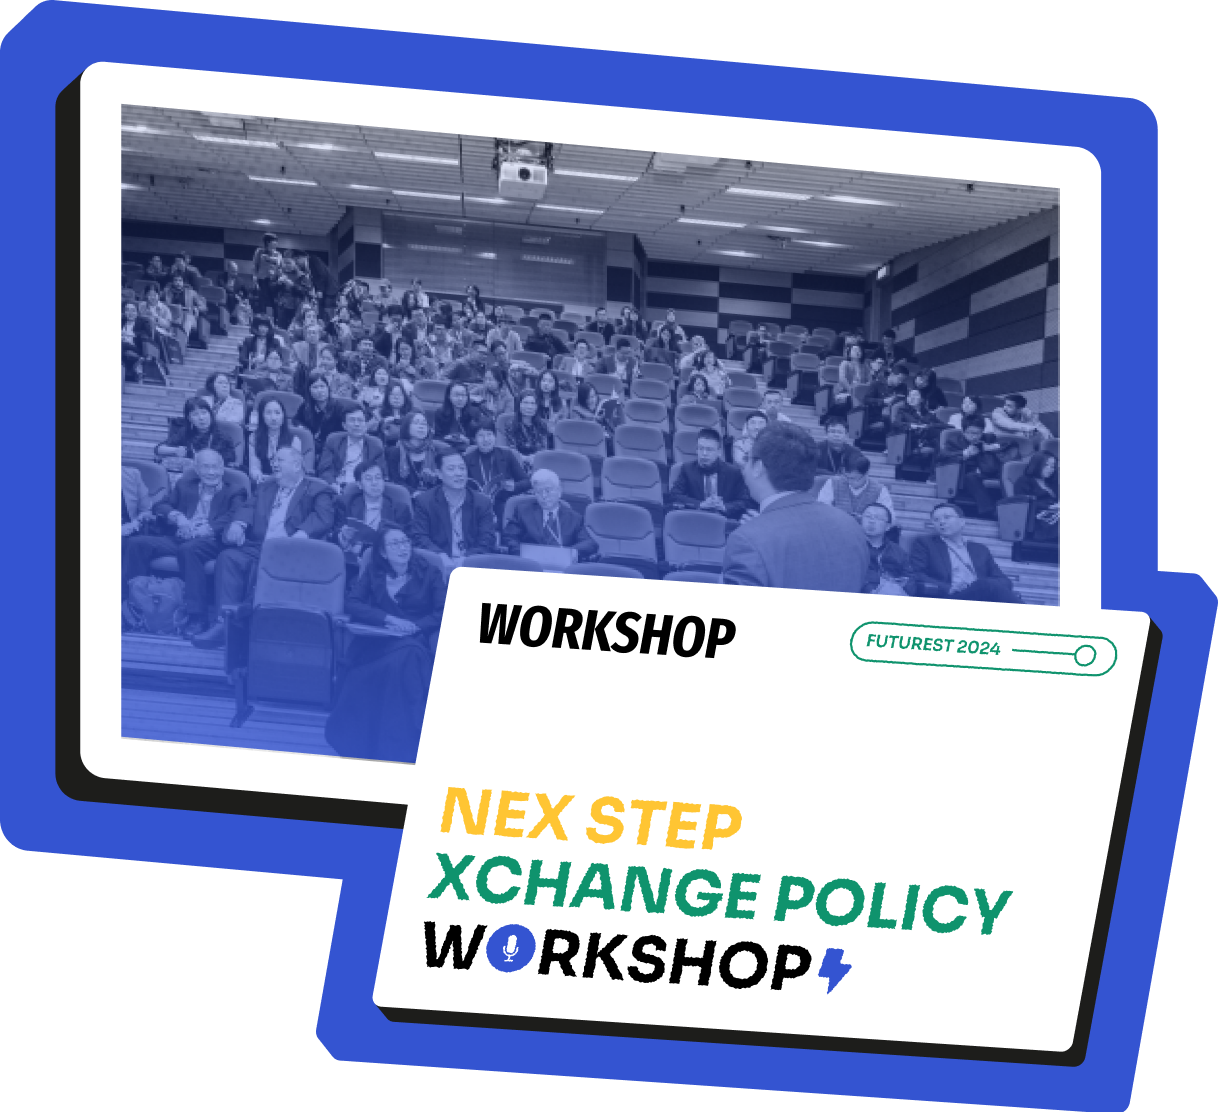 NEX STEP XChange Policy Workshop